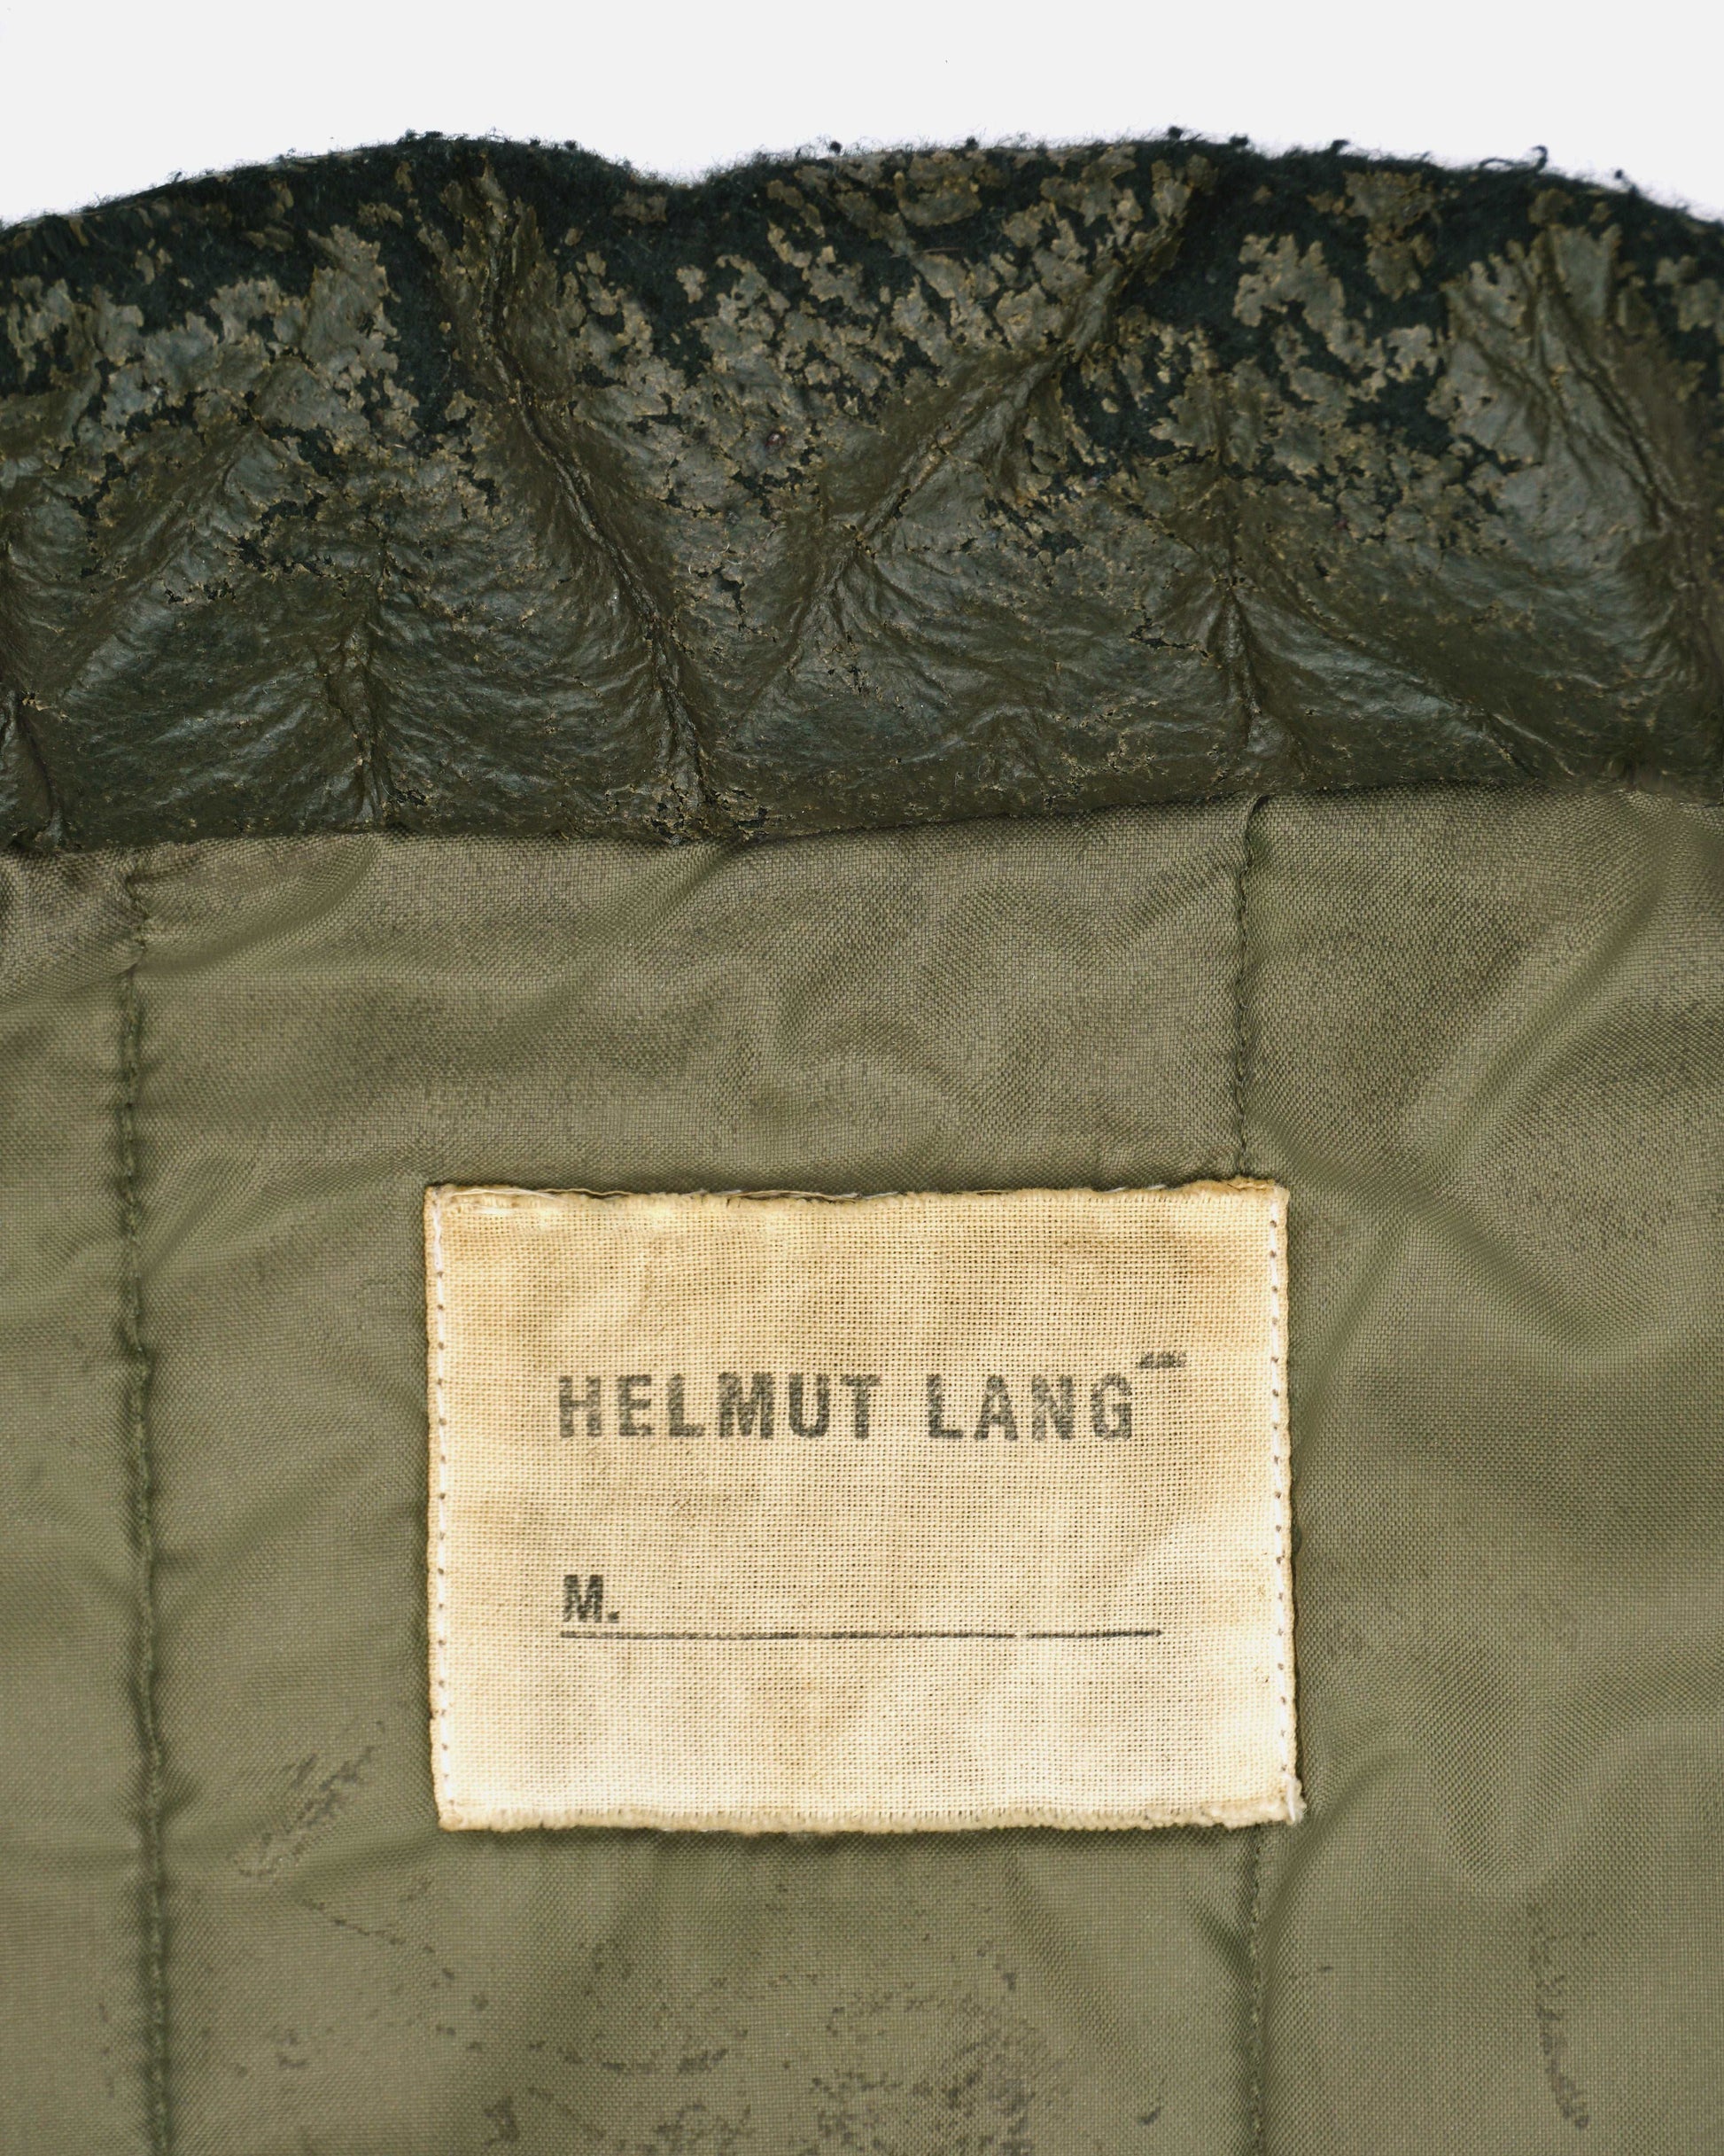 Helmut Lang Jeans AW99 Polyurethane Astro-Biker Jacket